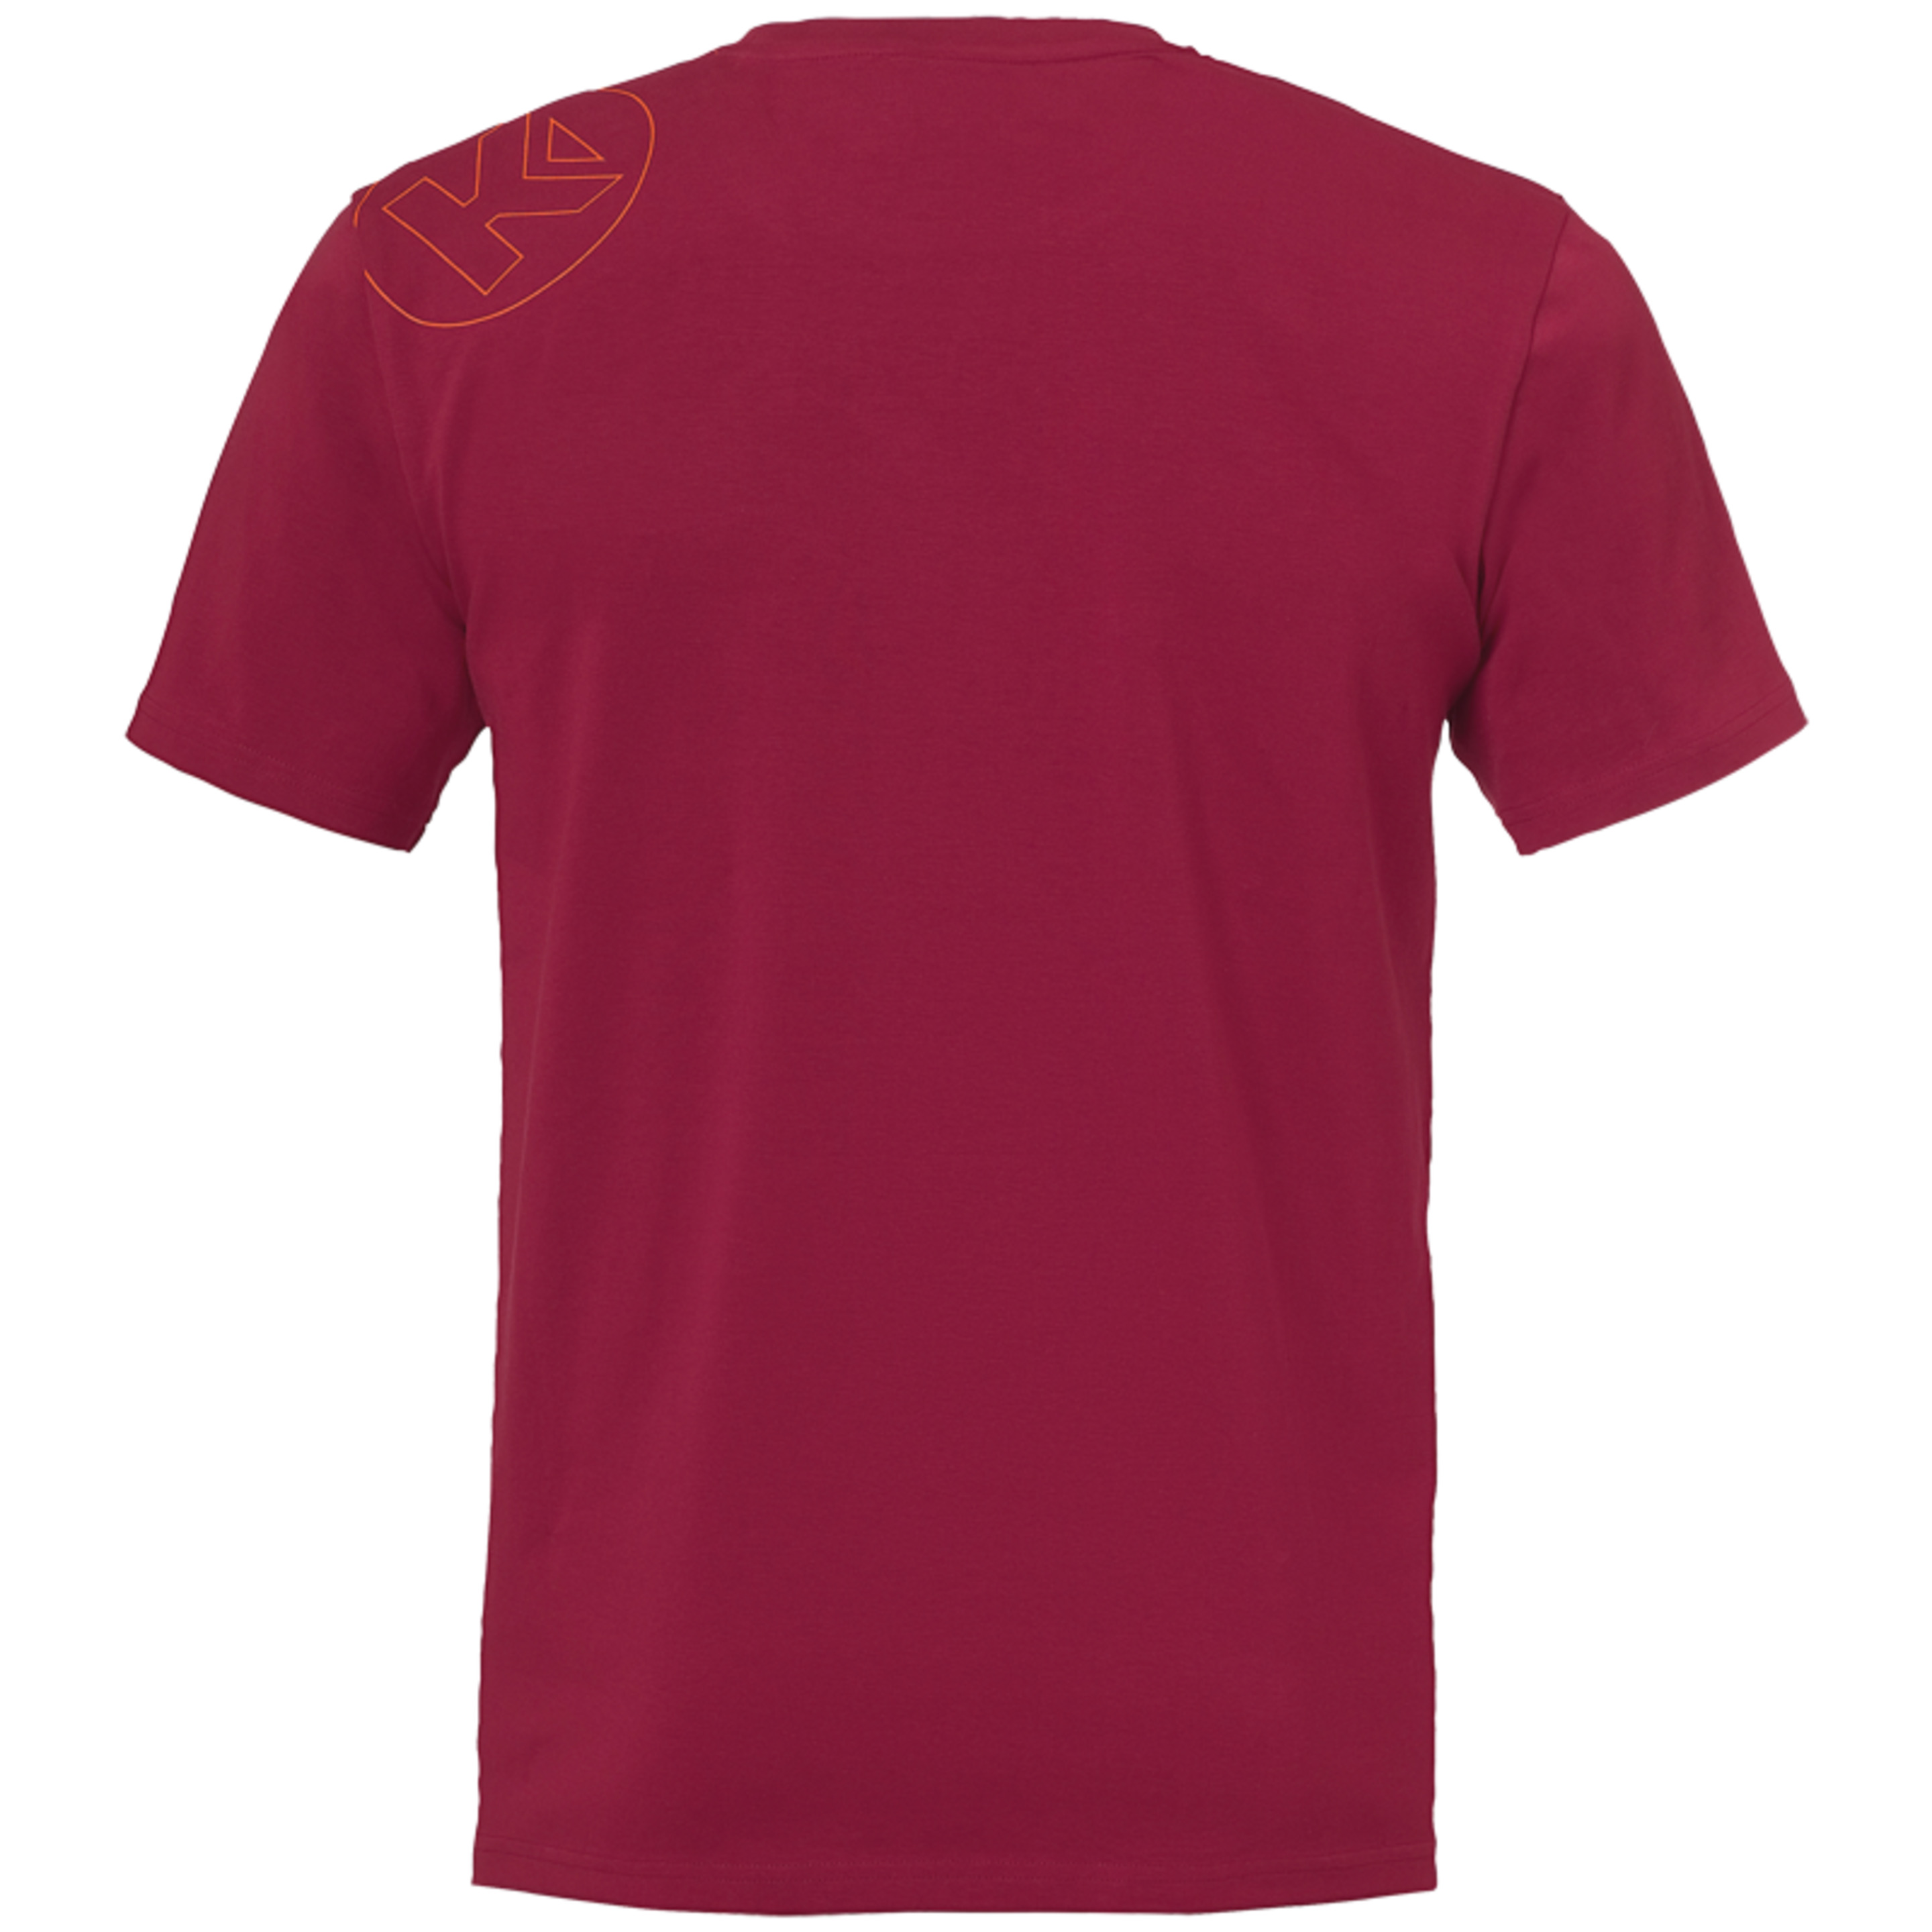 Graphic T-shirt Rojo Oscuro Kempa - rojo - Graphic T-shirt Rojo Oscuro Kempa  MKP